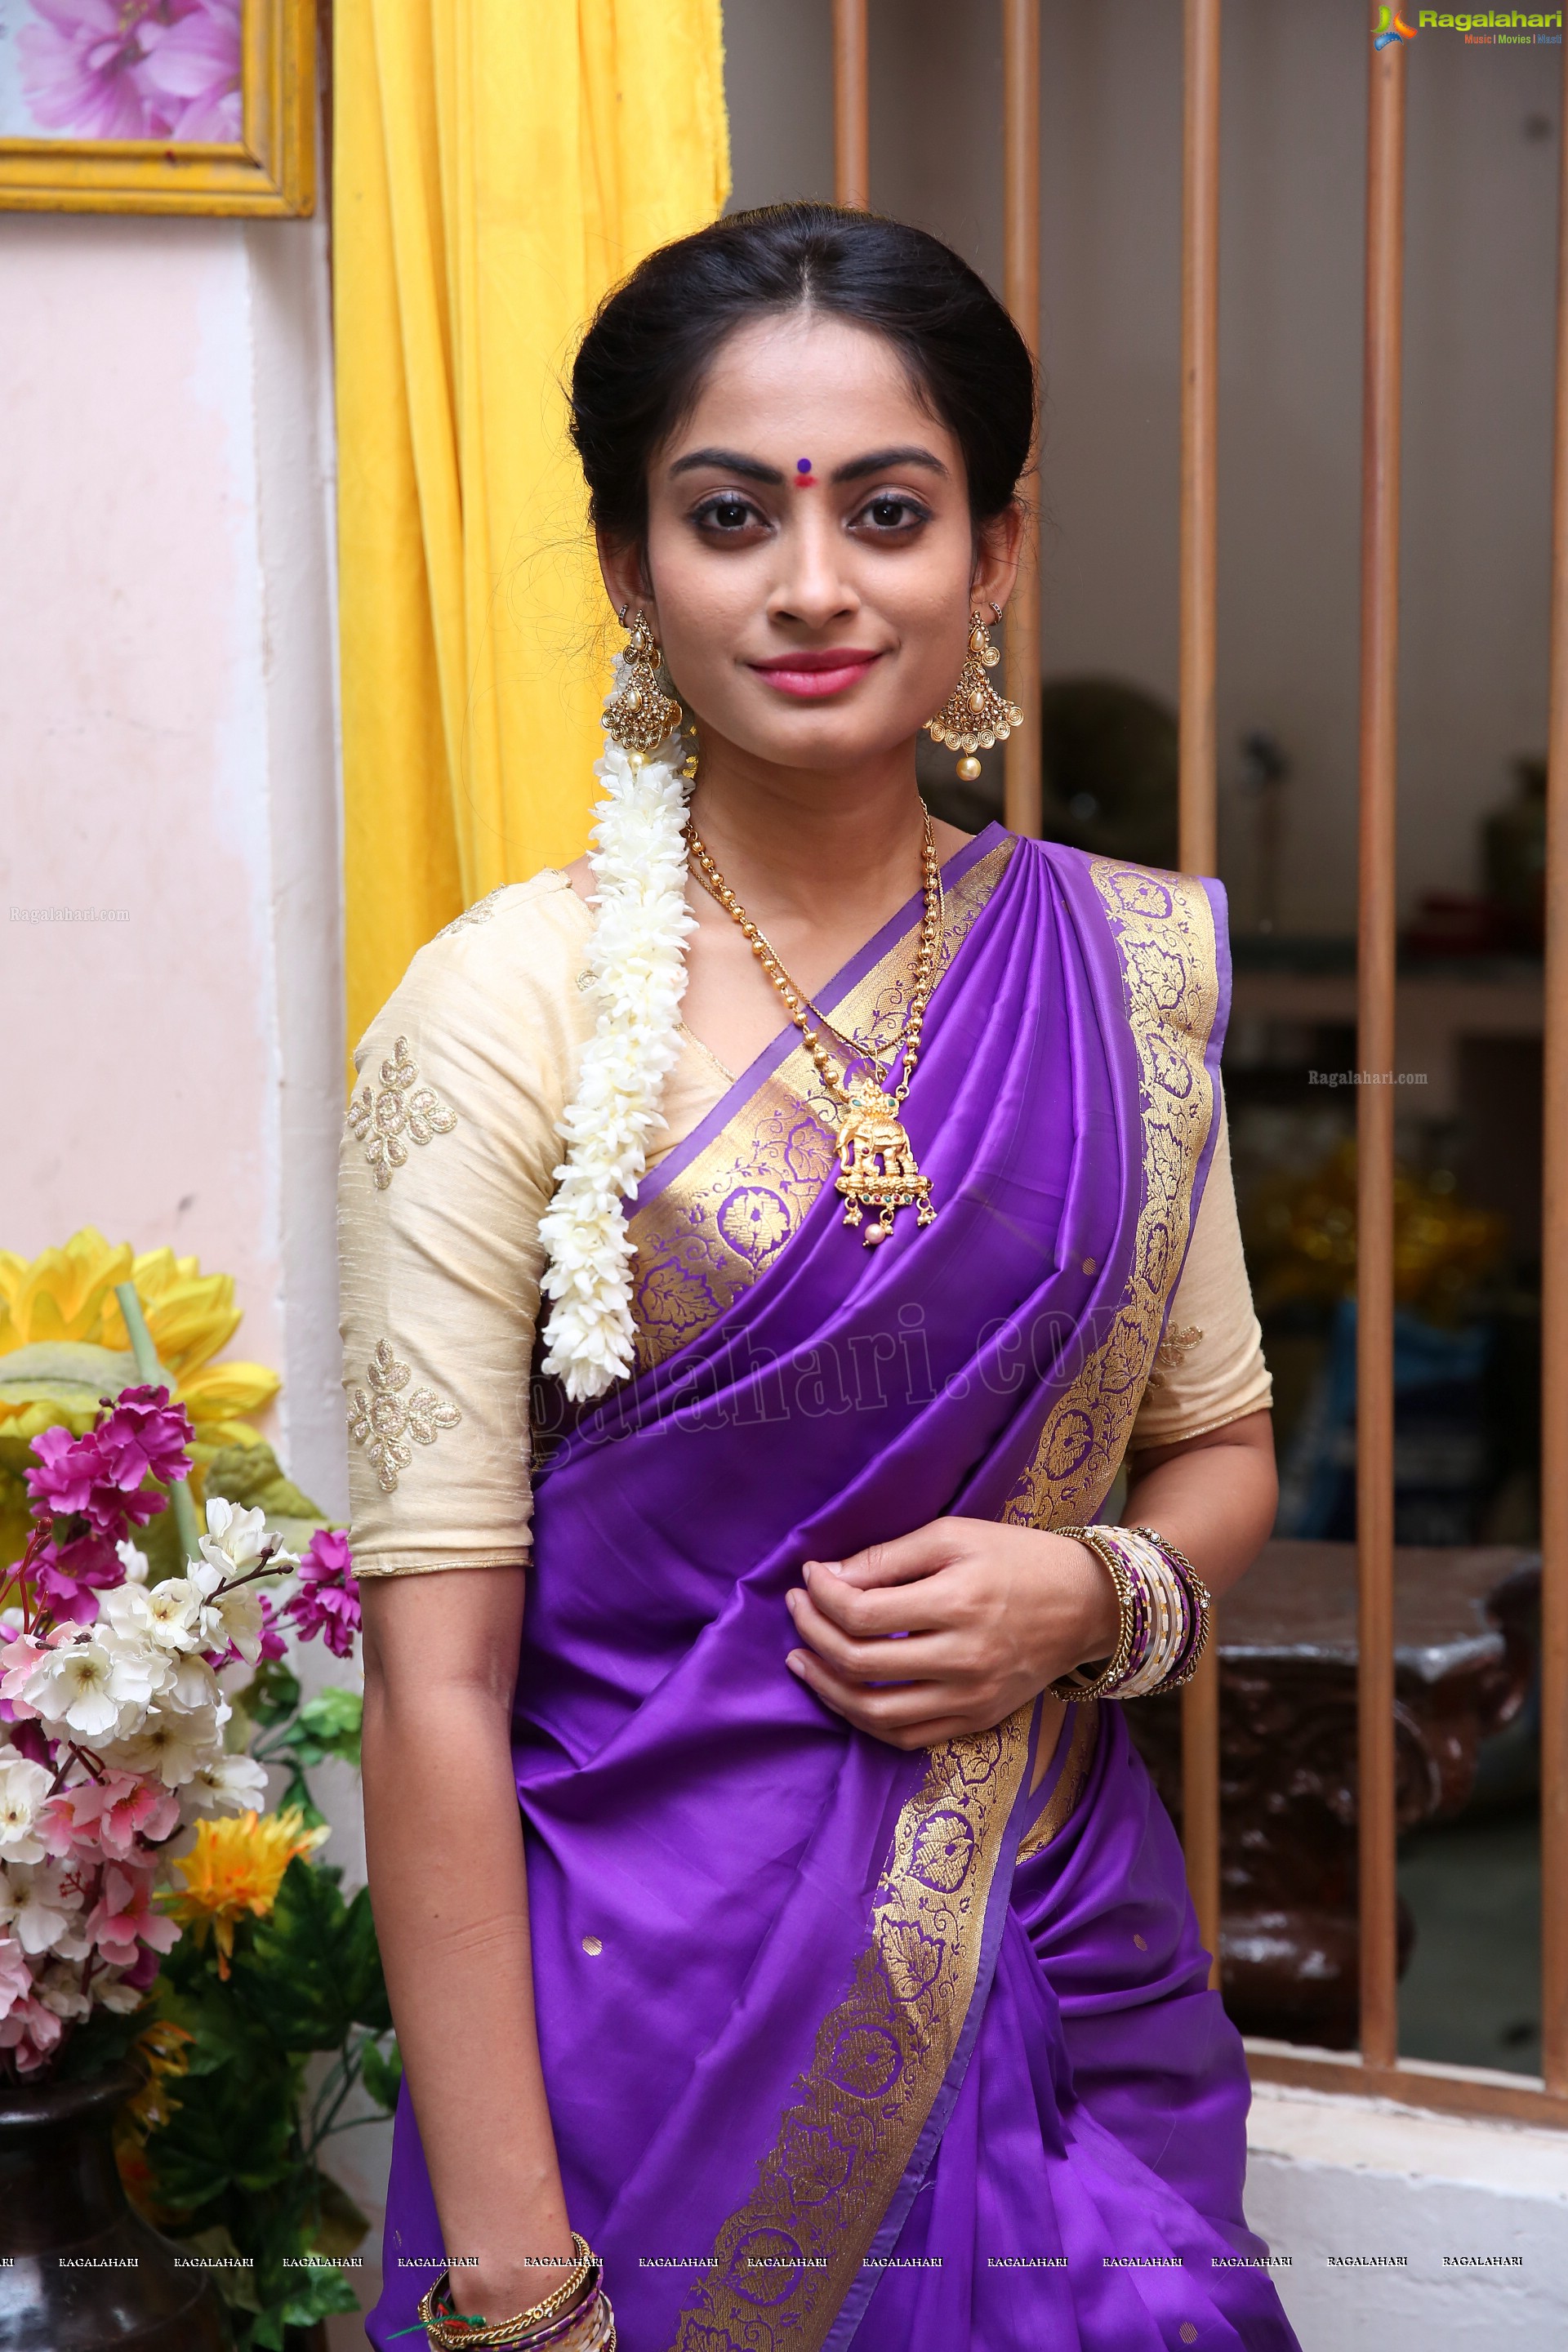 Sri Priya From the Sets of Agnisakshi Telugu Serial